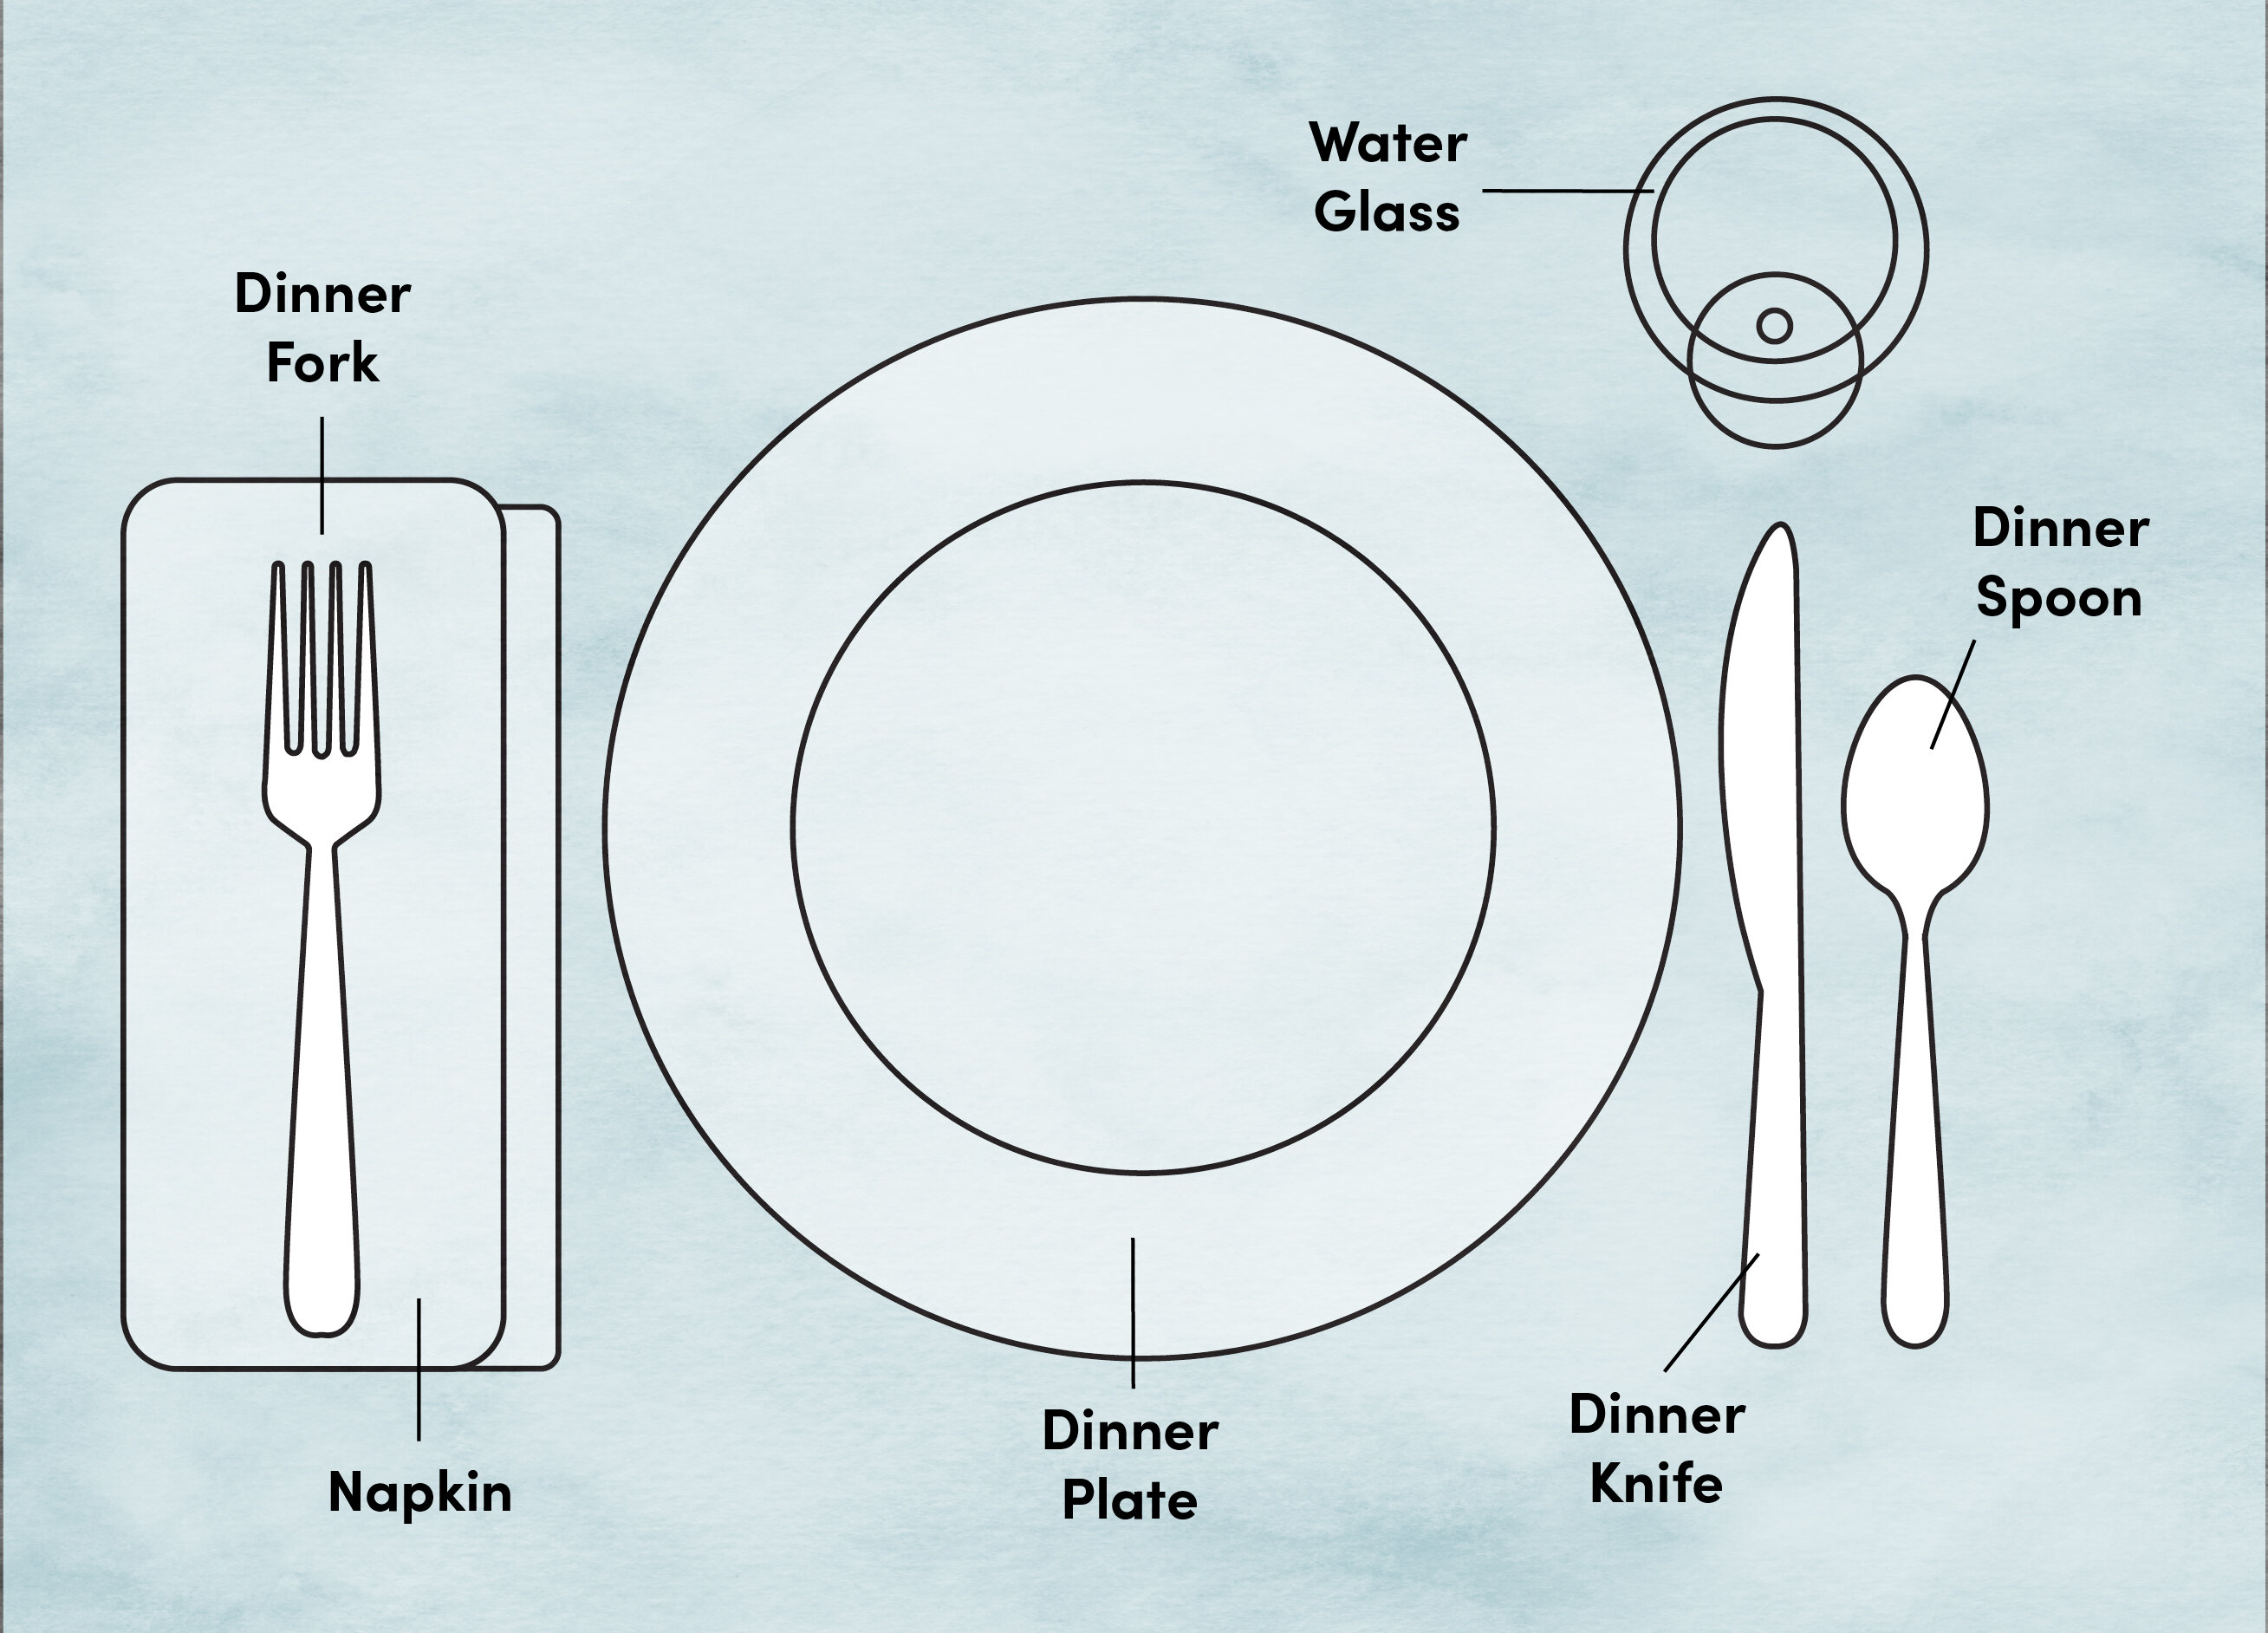 Etiquette Training: Proper Place and Table Setting Diagram | Wayfair